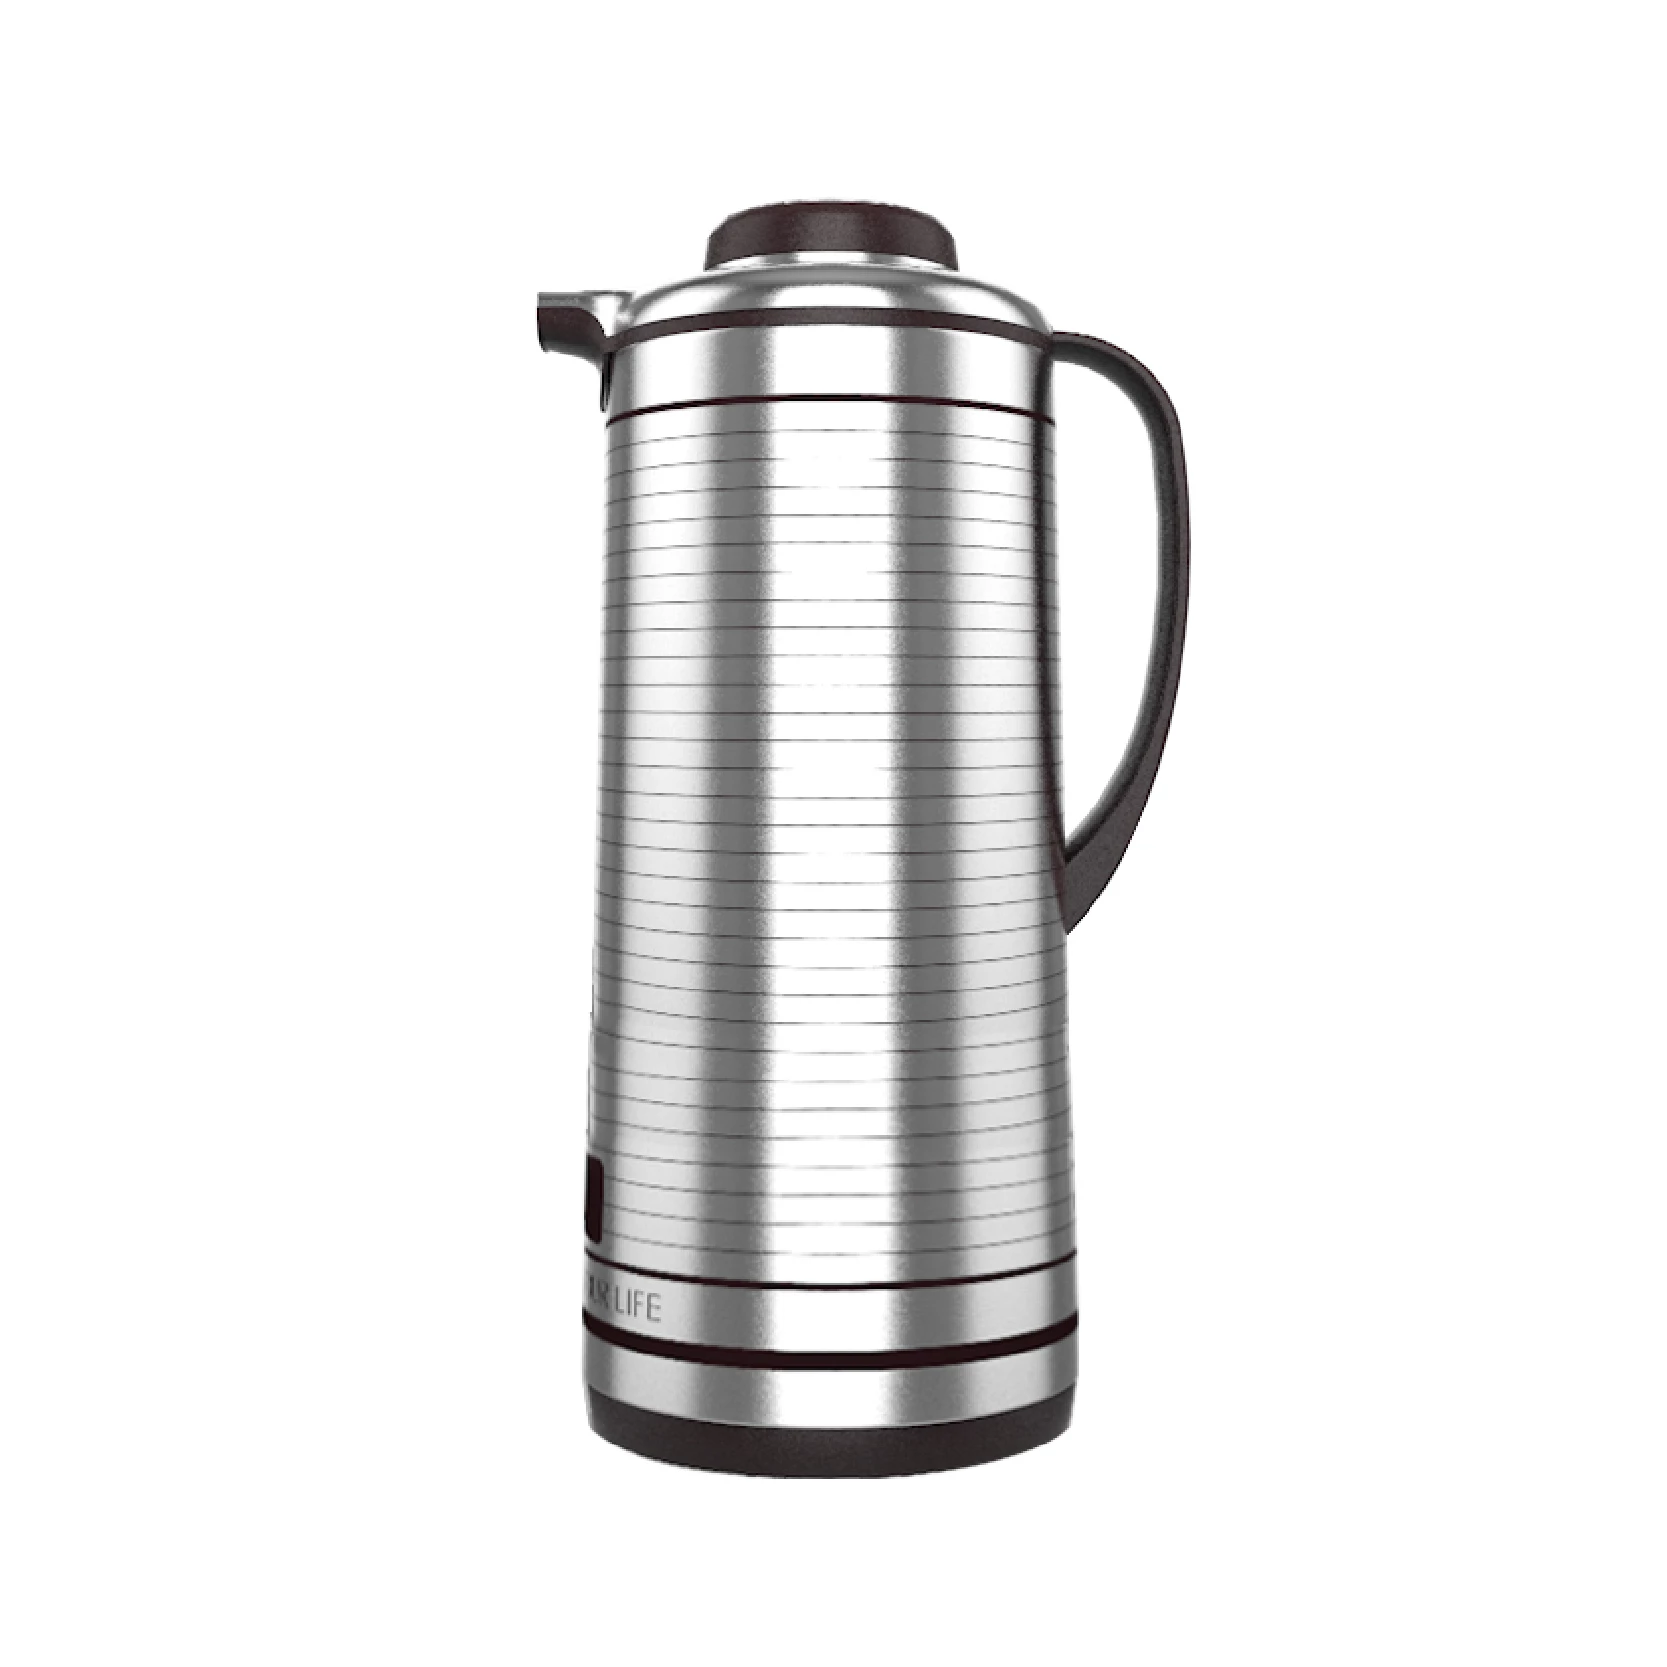 https://vacuumflask.rangdong.com.vn/static/Coffee-series-6/av4.jpg